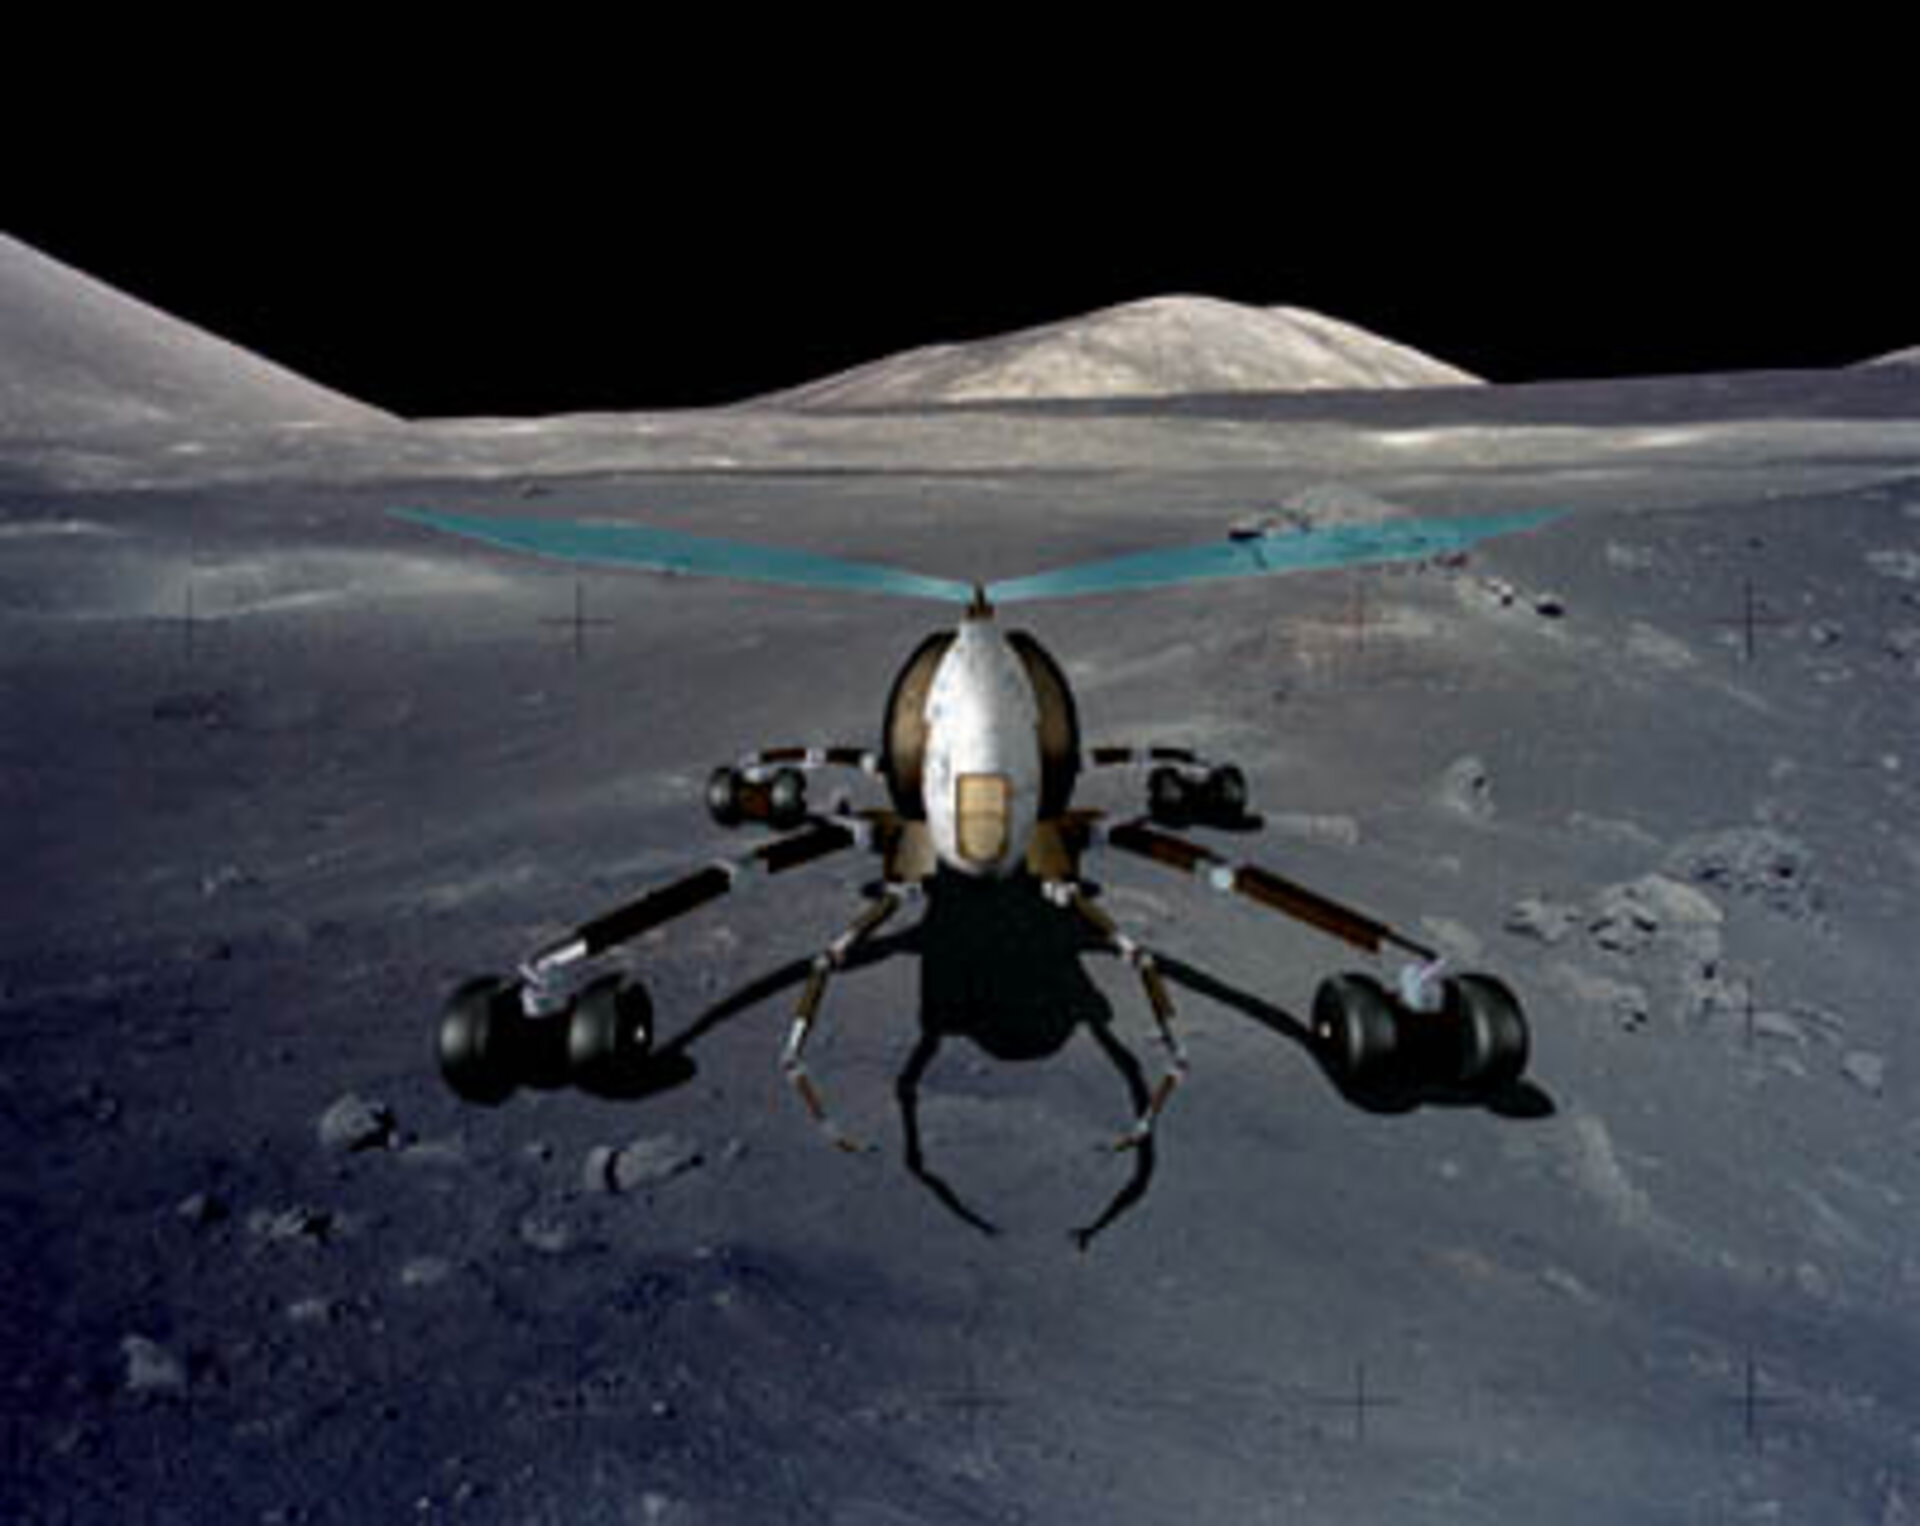 Mobile lunar habitat servicing the lunar radio telescope